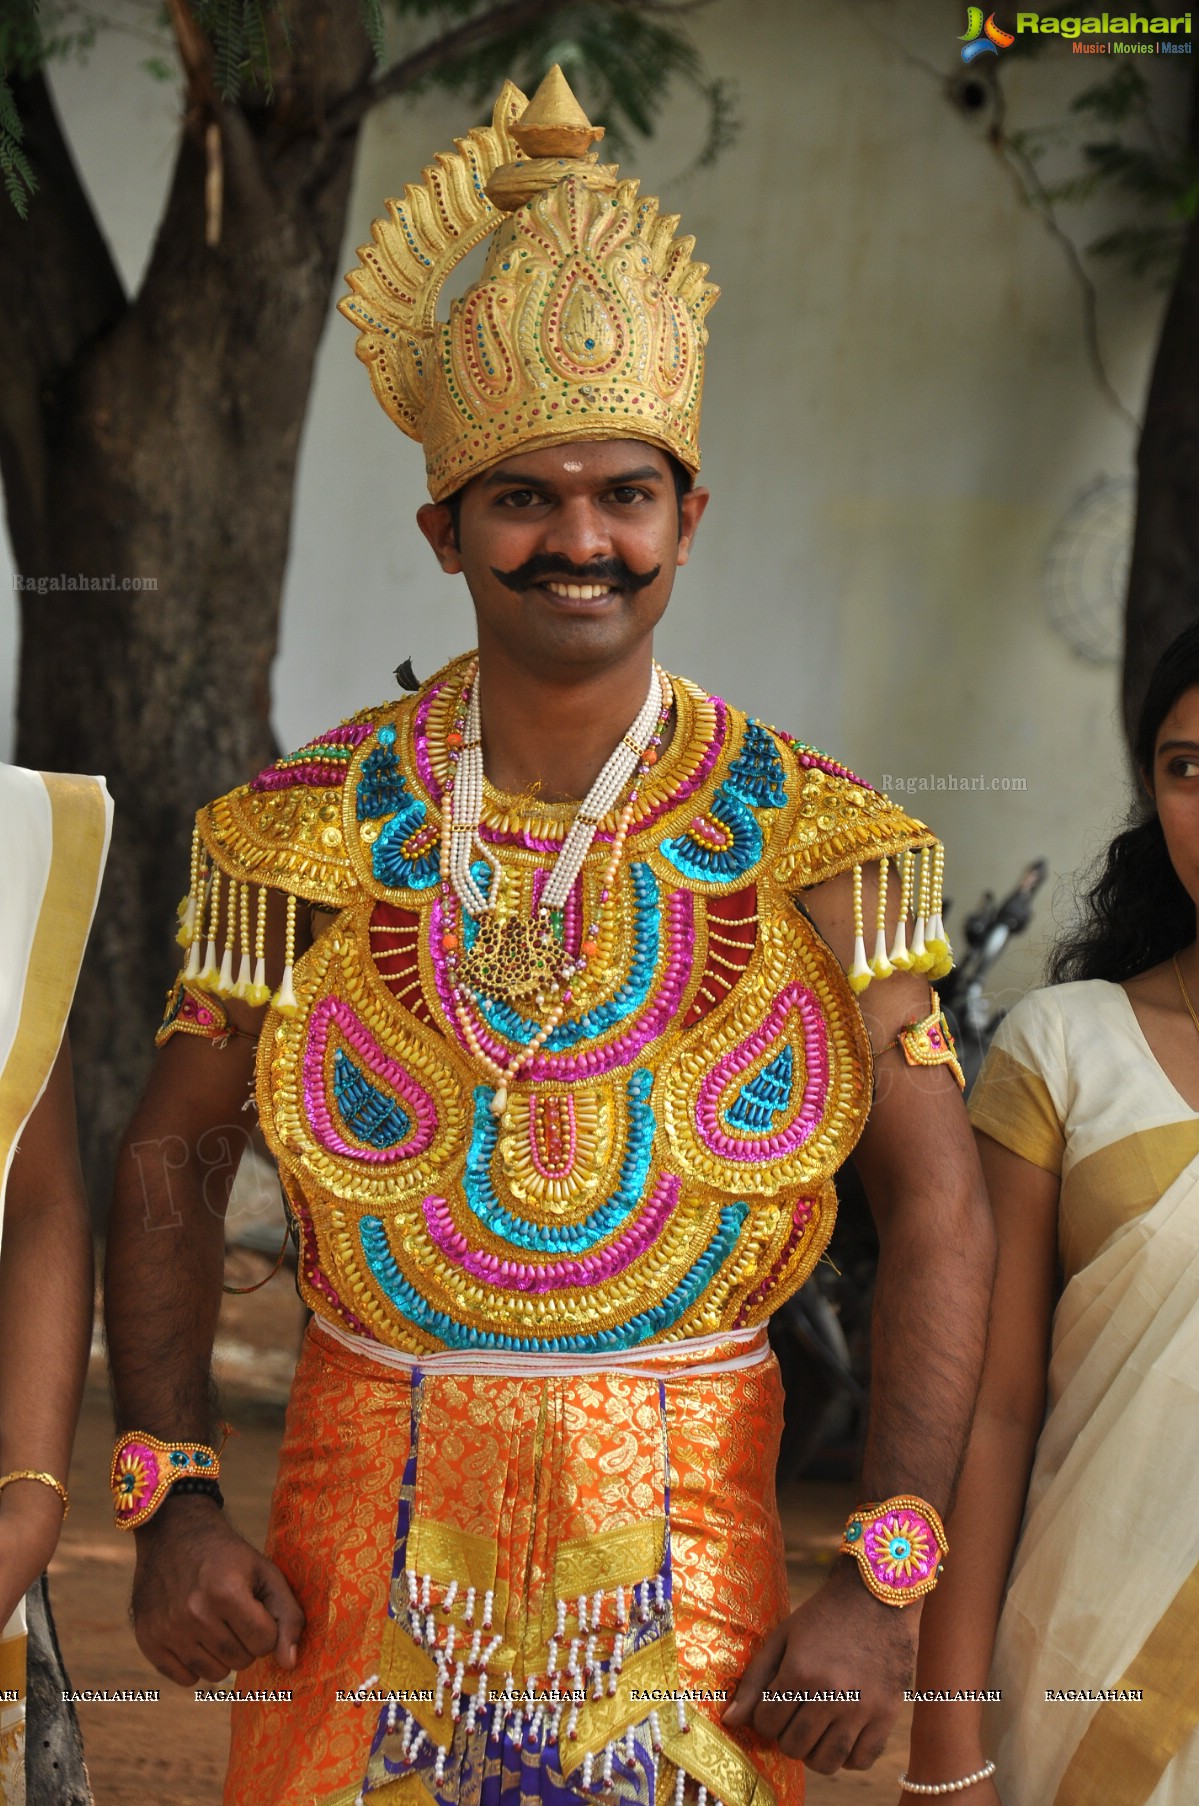 Apollo Hyderabad celebrates Onam Festival